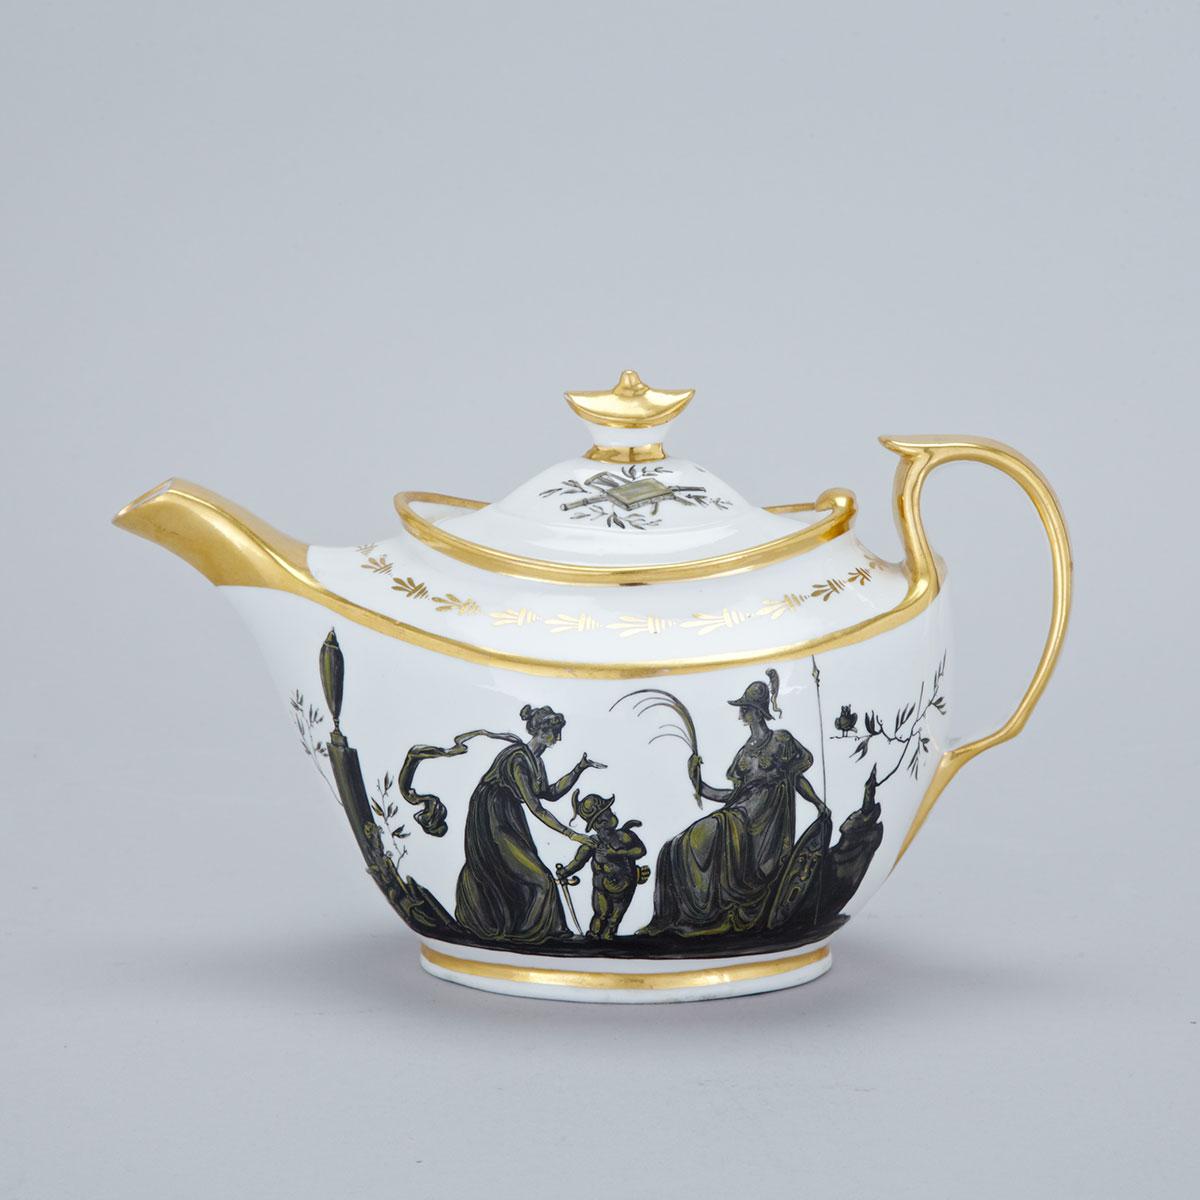 Coalport Teapot, c.1805-10